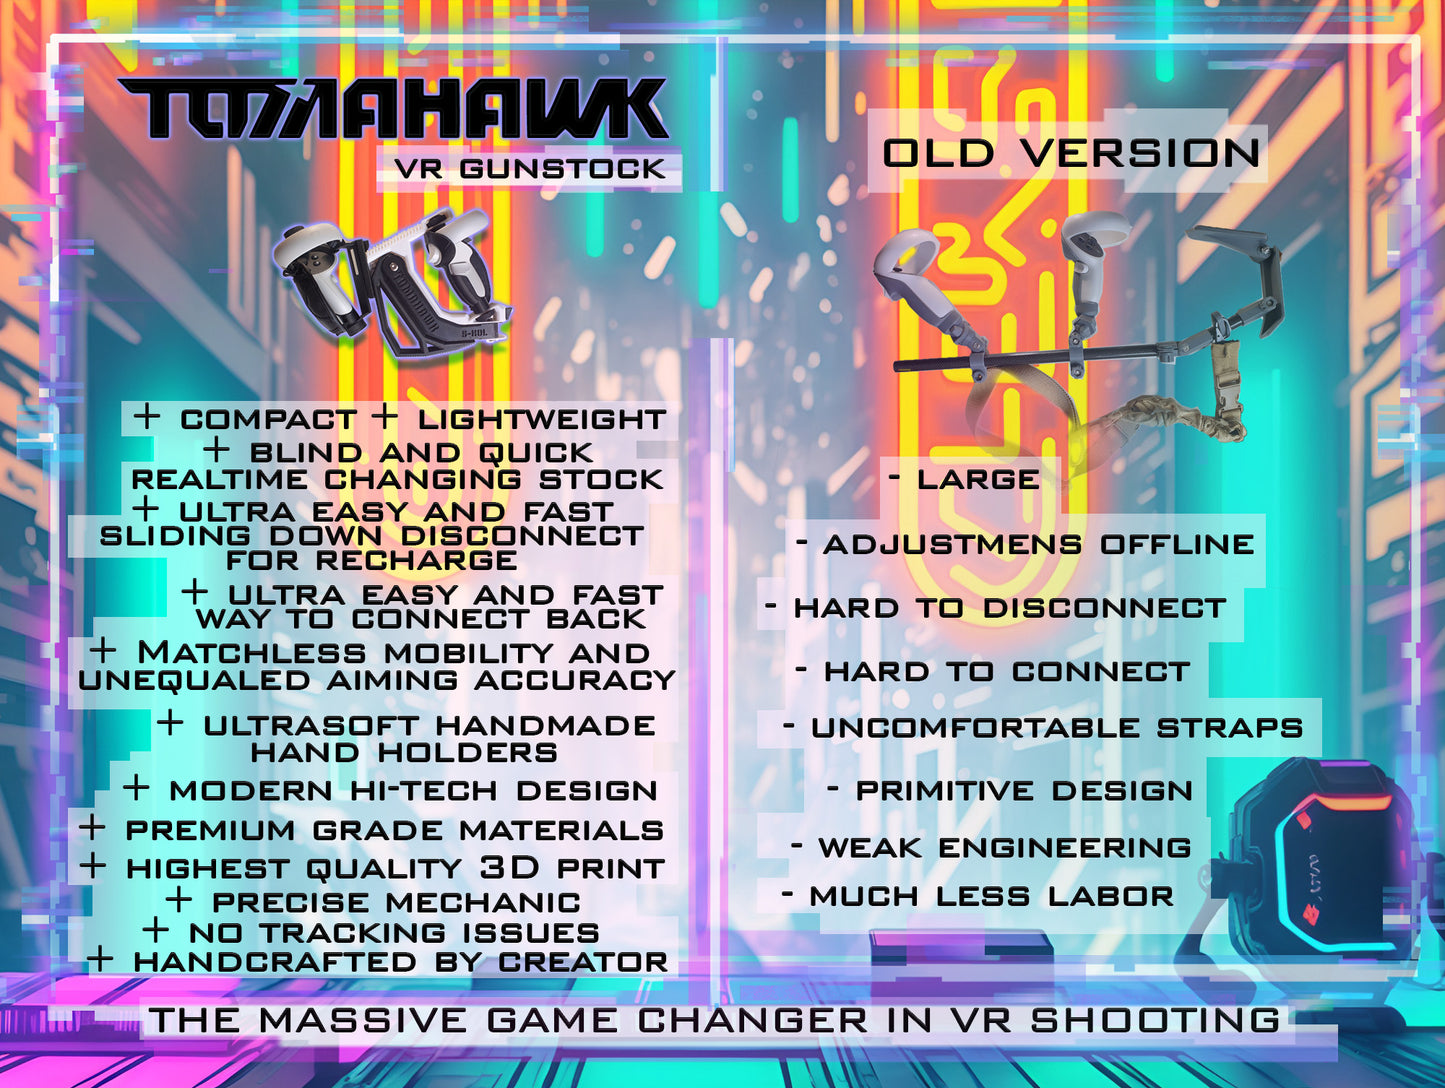 Tomahawk VR Gunstock 3in1